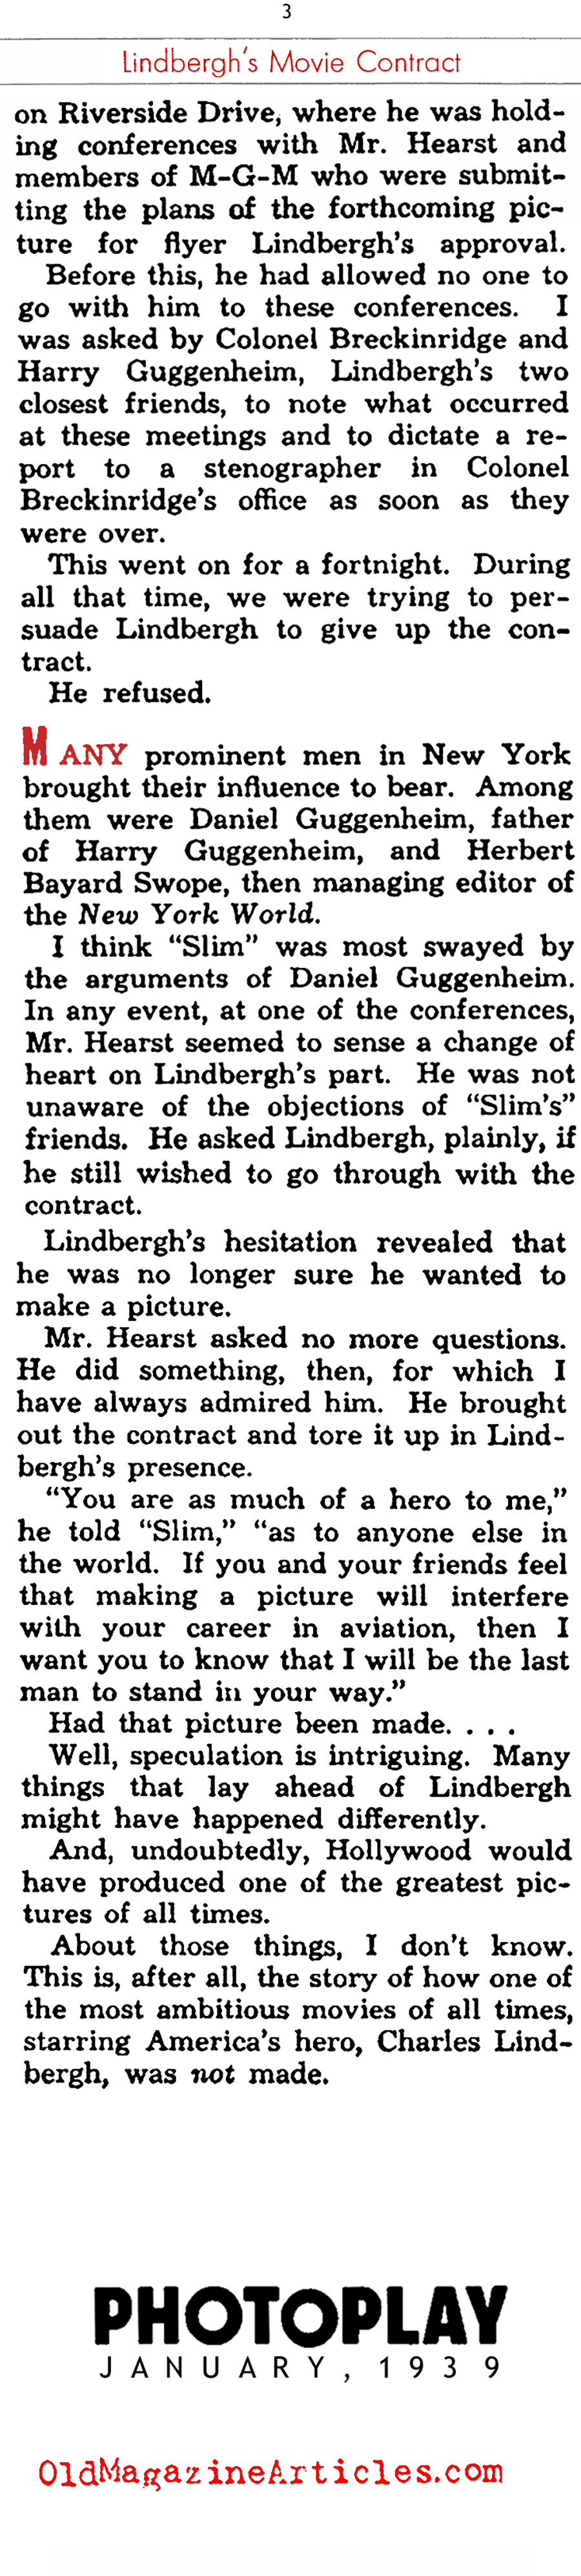 Lindbergh's Movie Contract (Photoplay Magazine, 1939)